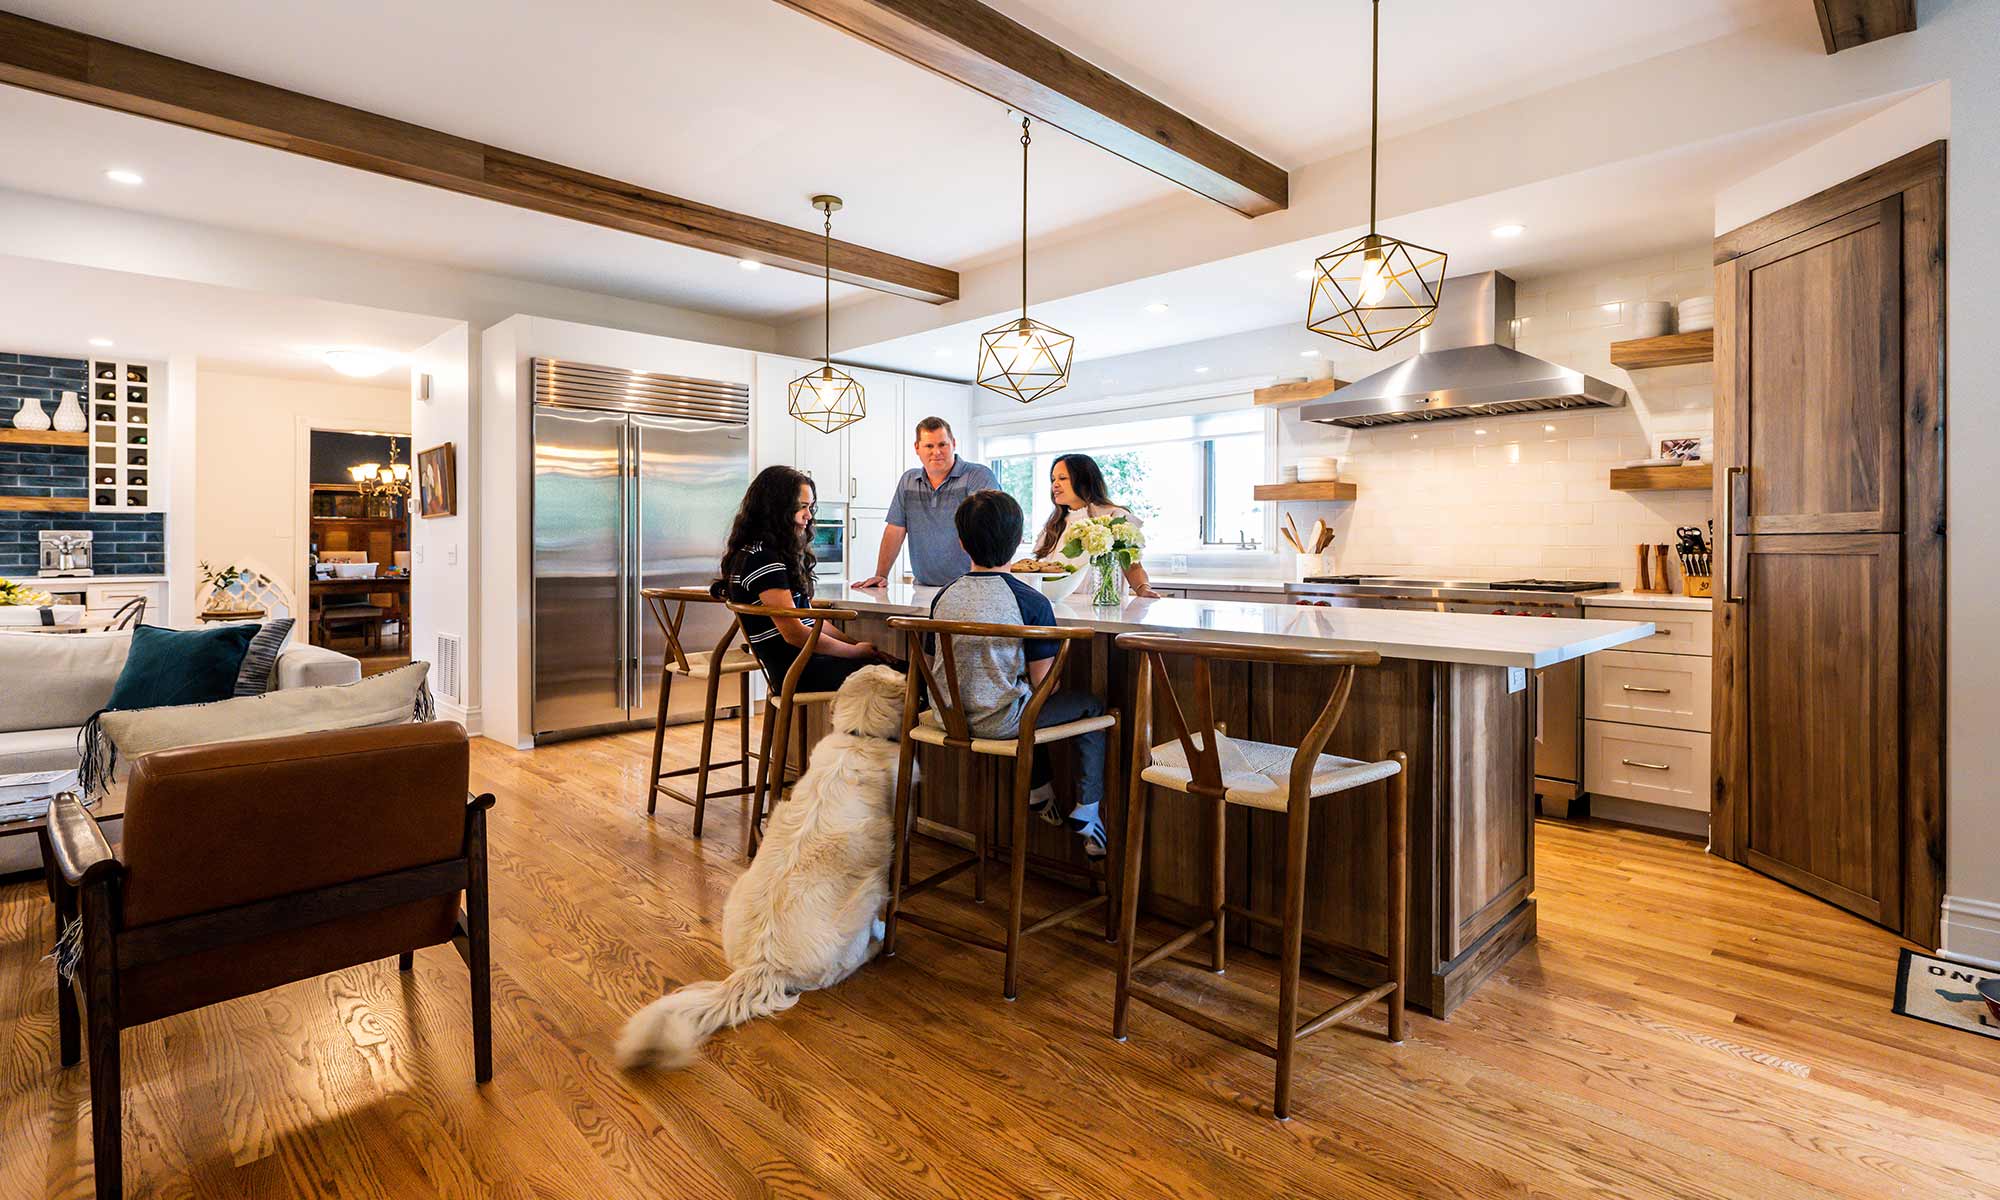 family around luxury kitchen island with dog